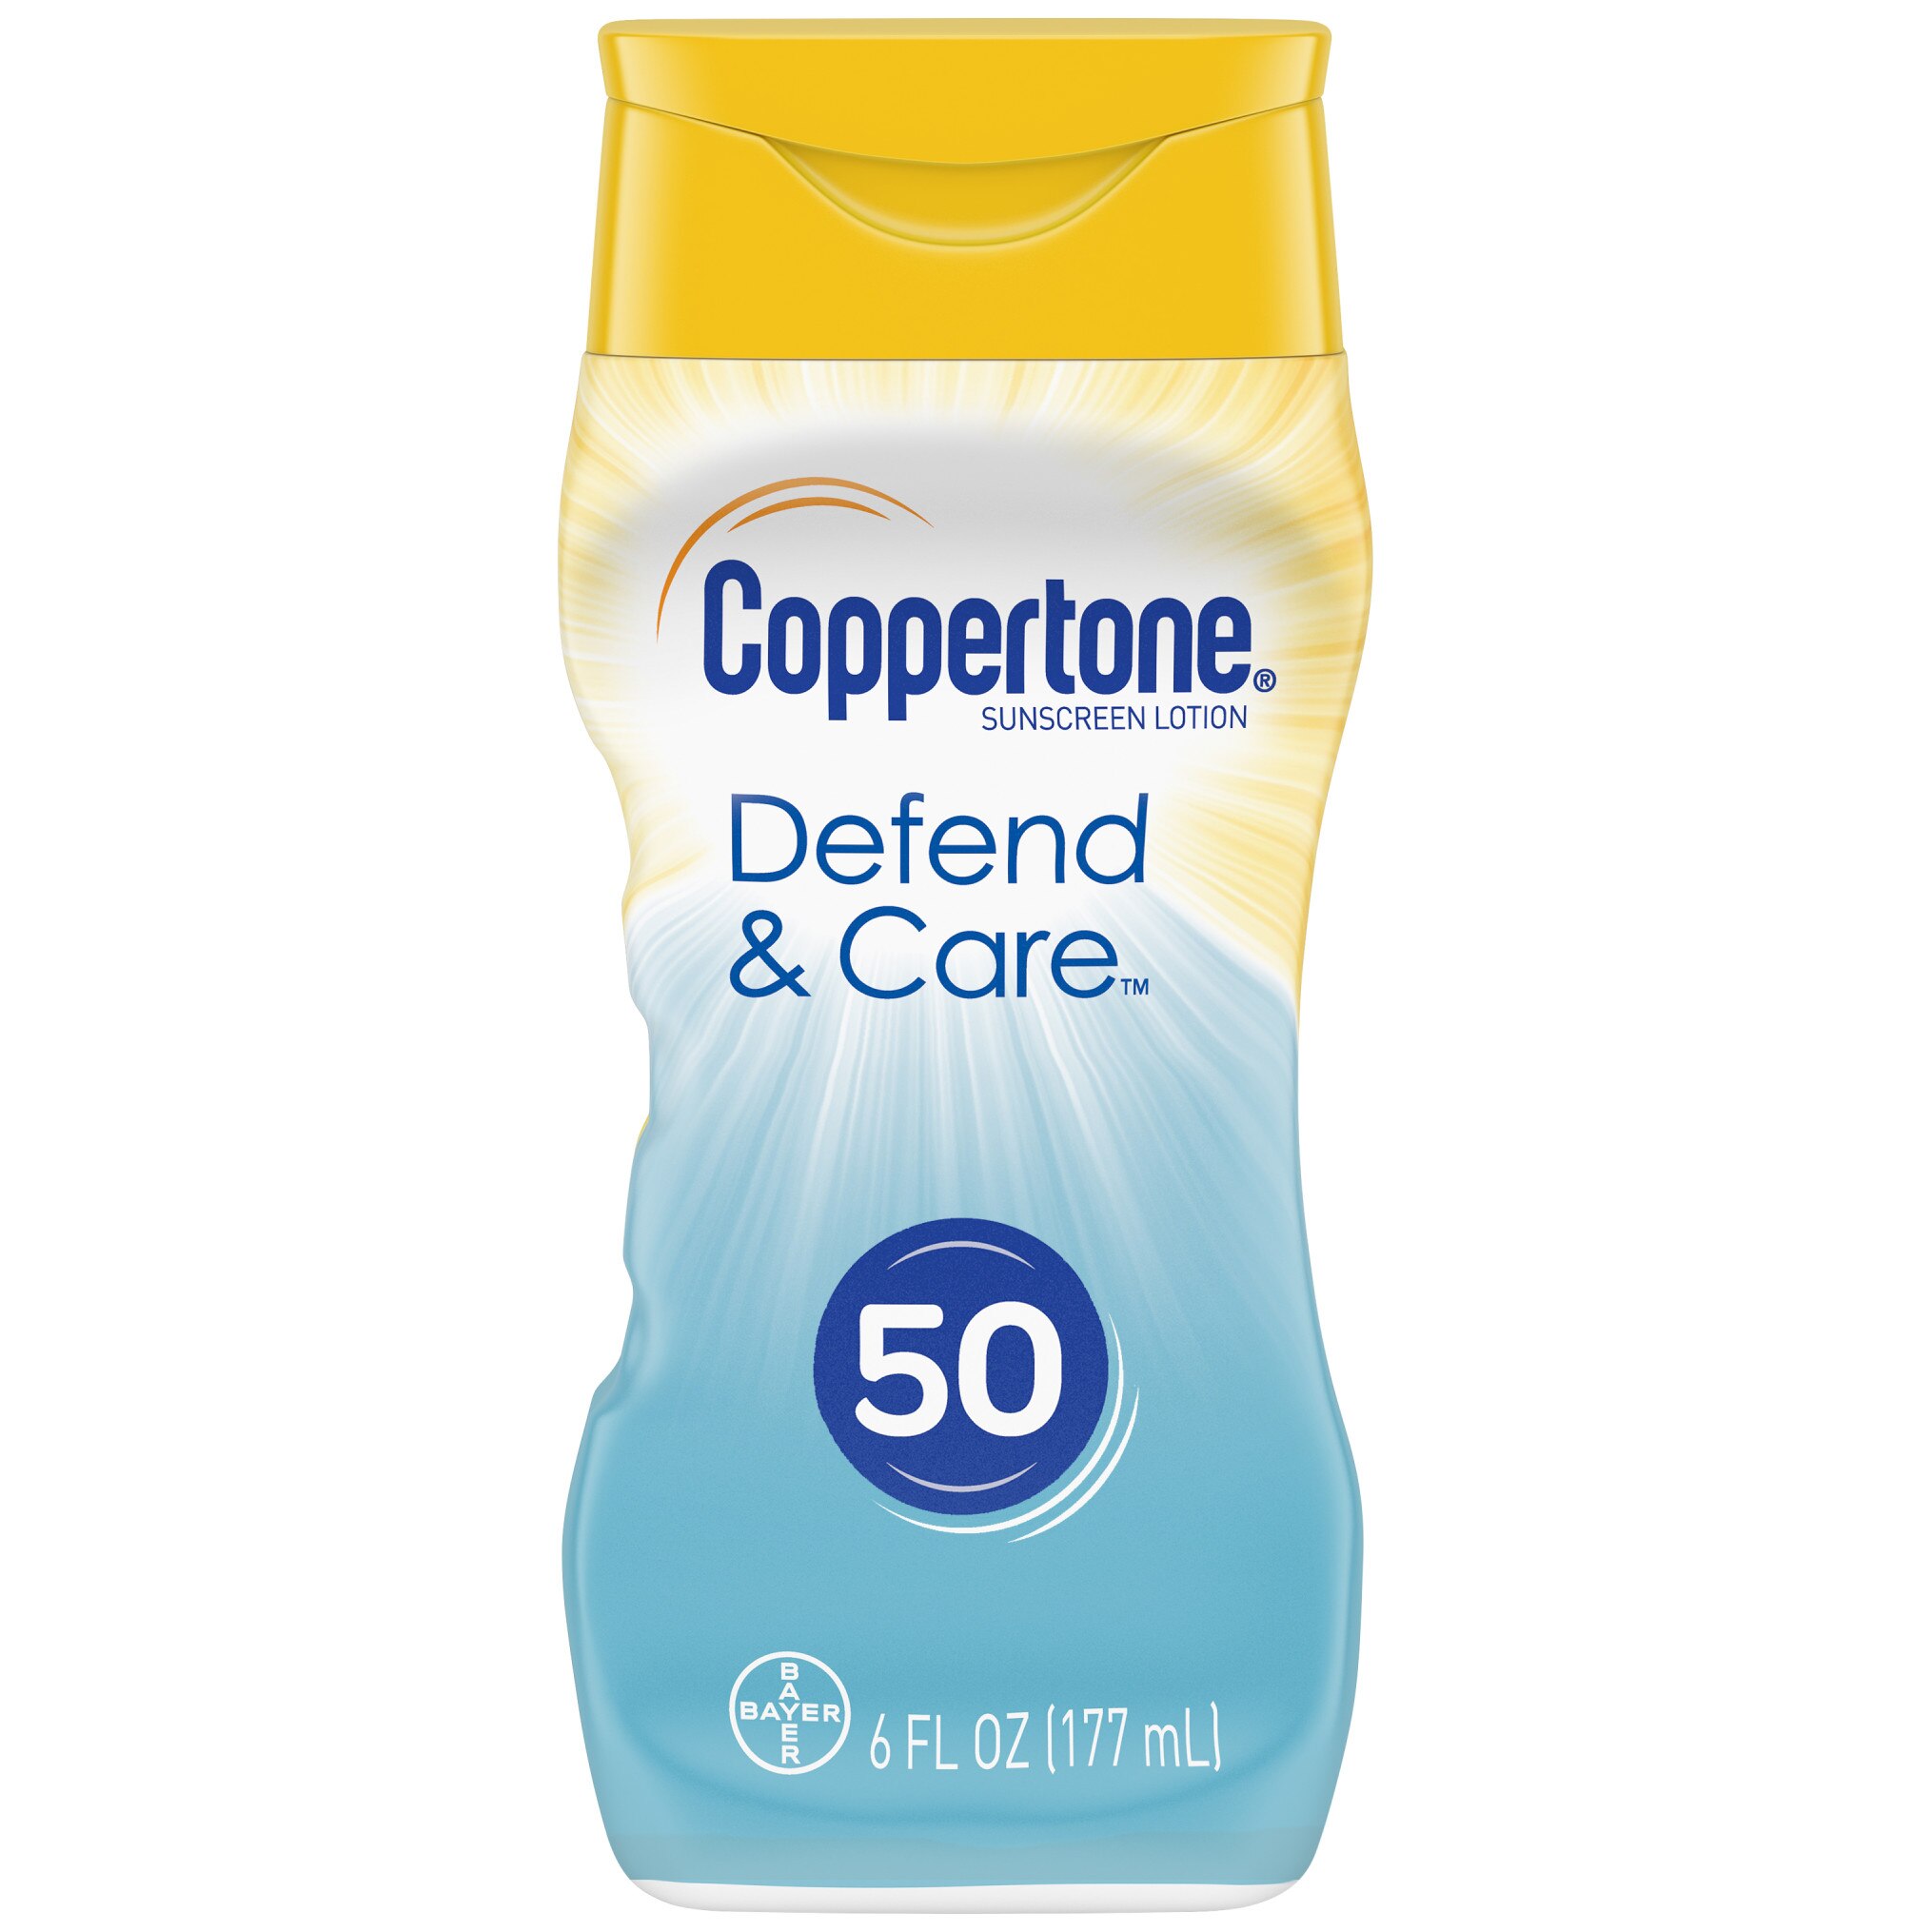 Coppertone Defend & Care Clear Zinc Sunscreen Broad Spectrum SPF 50 Lotion, 6 OZ